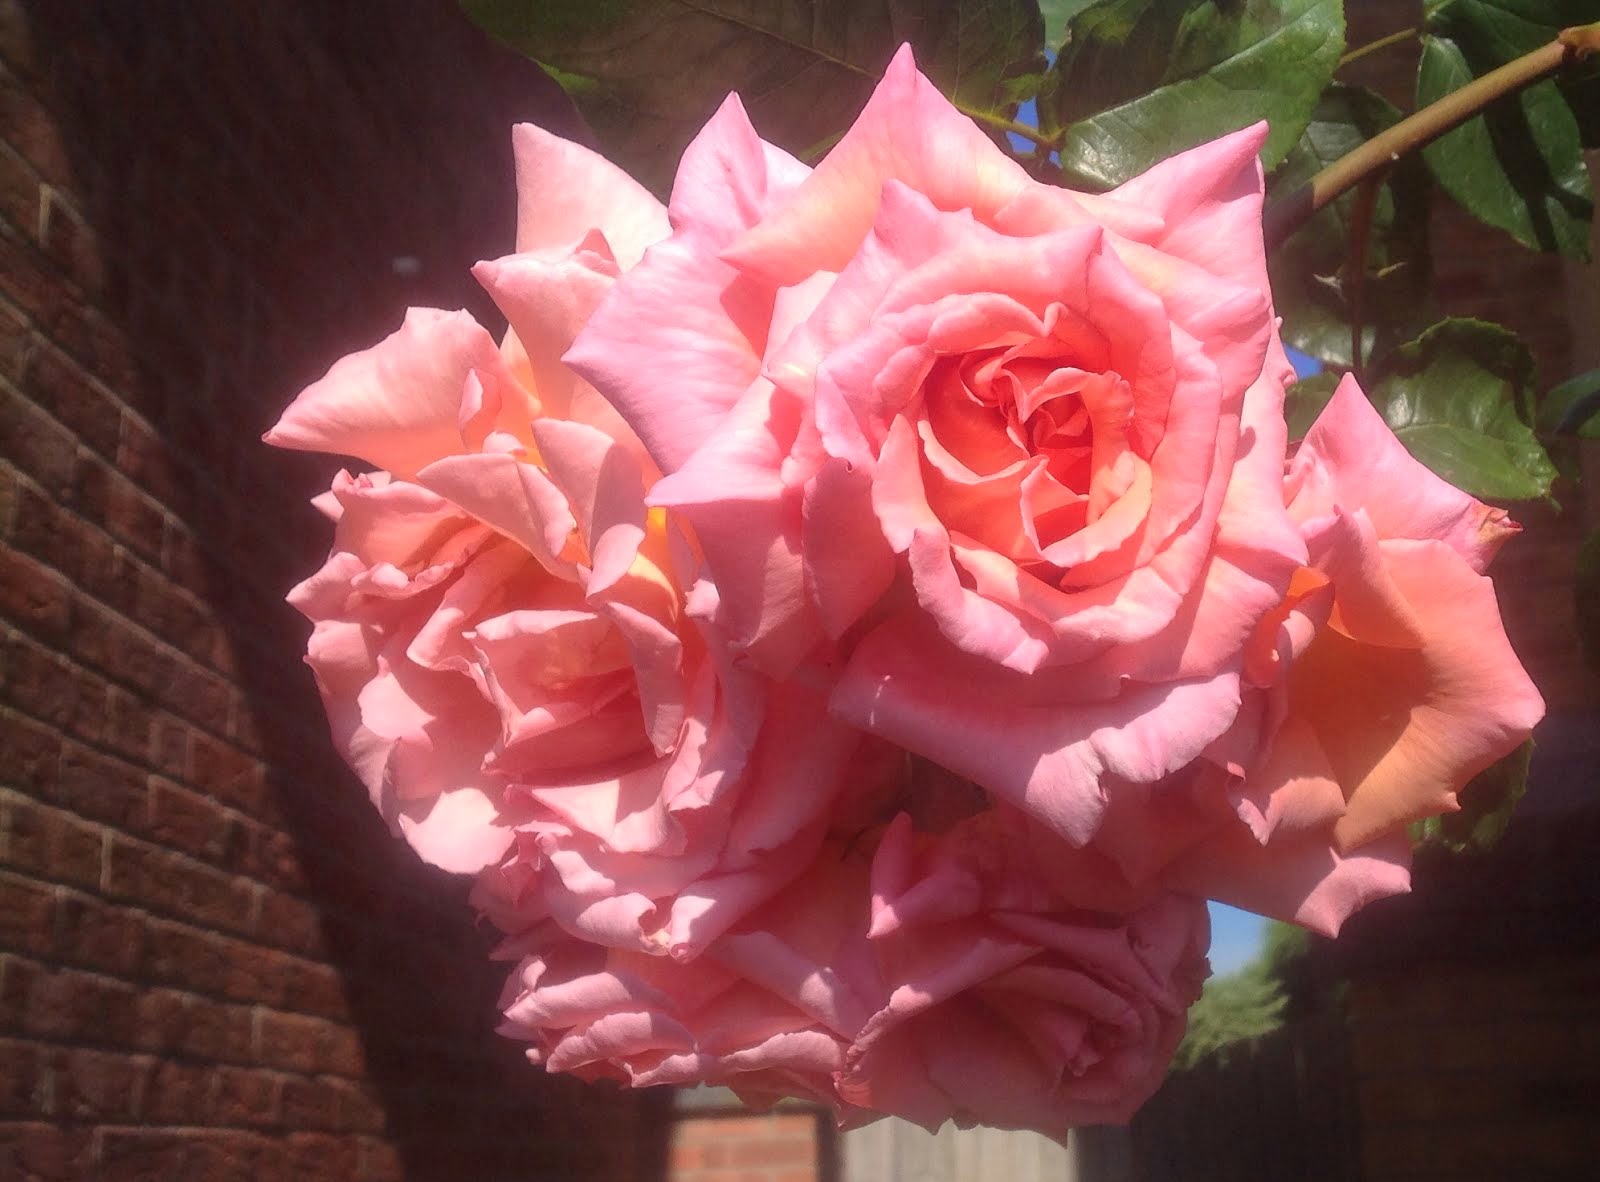 Surprise garden rose (Photo)